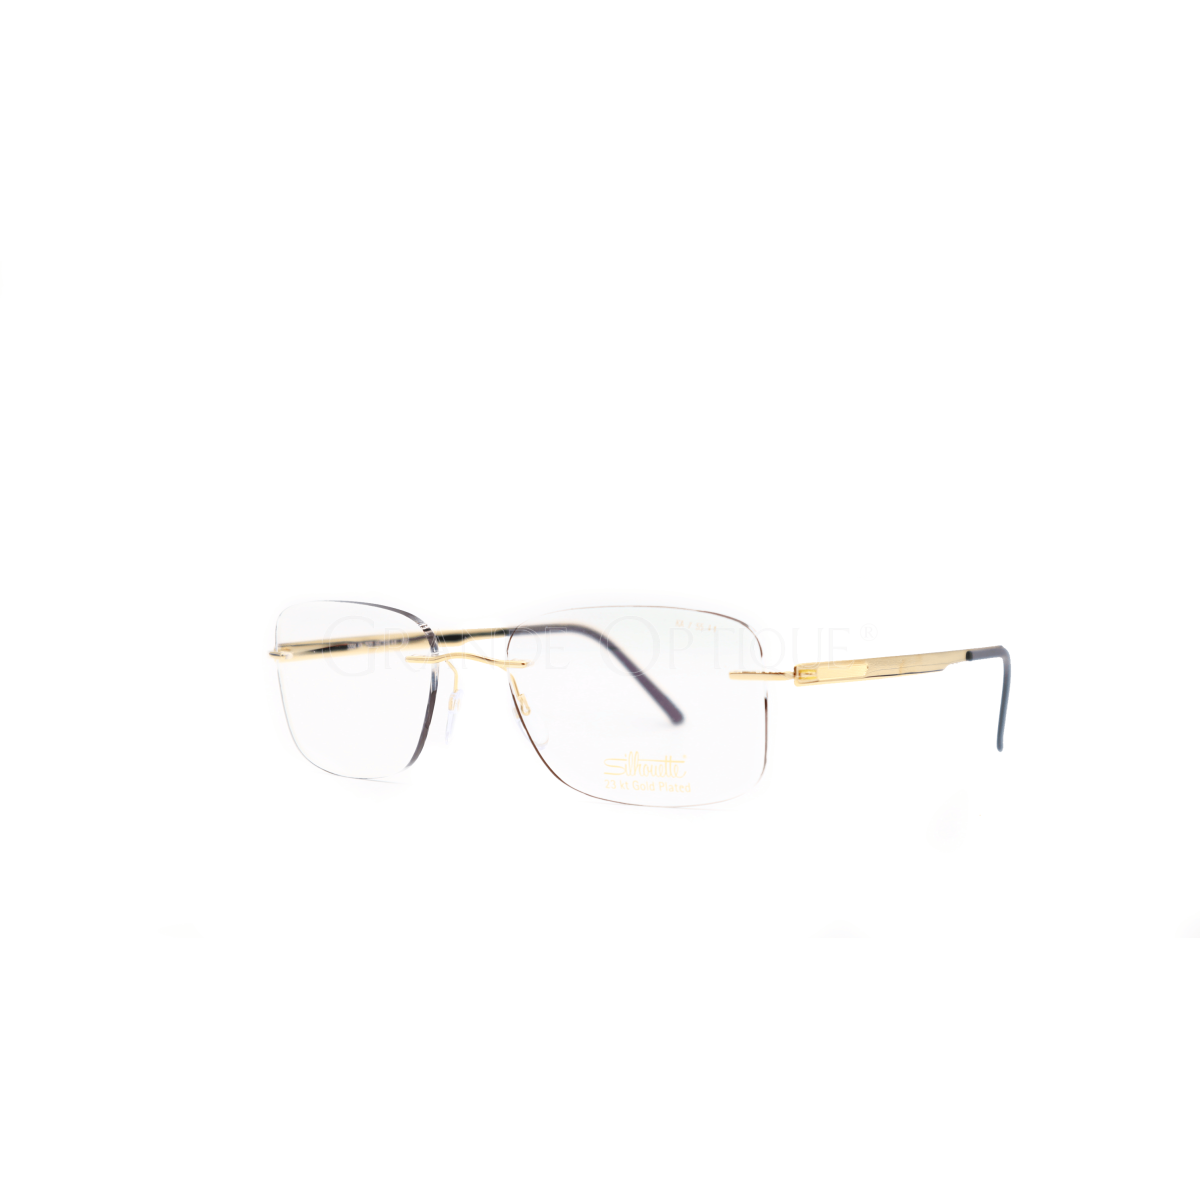 Rame de ochelari Silhouette 5554 KA 7520 placate cu aur 23k